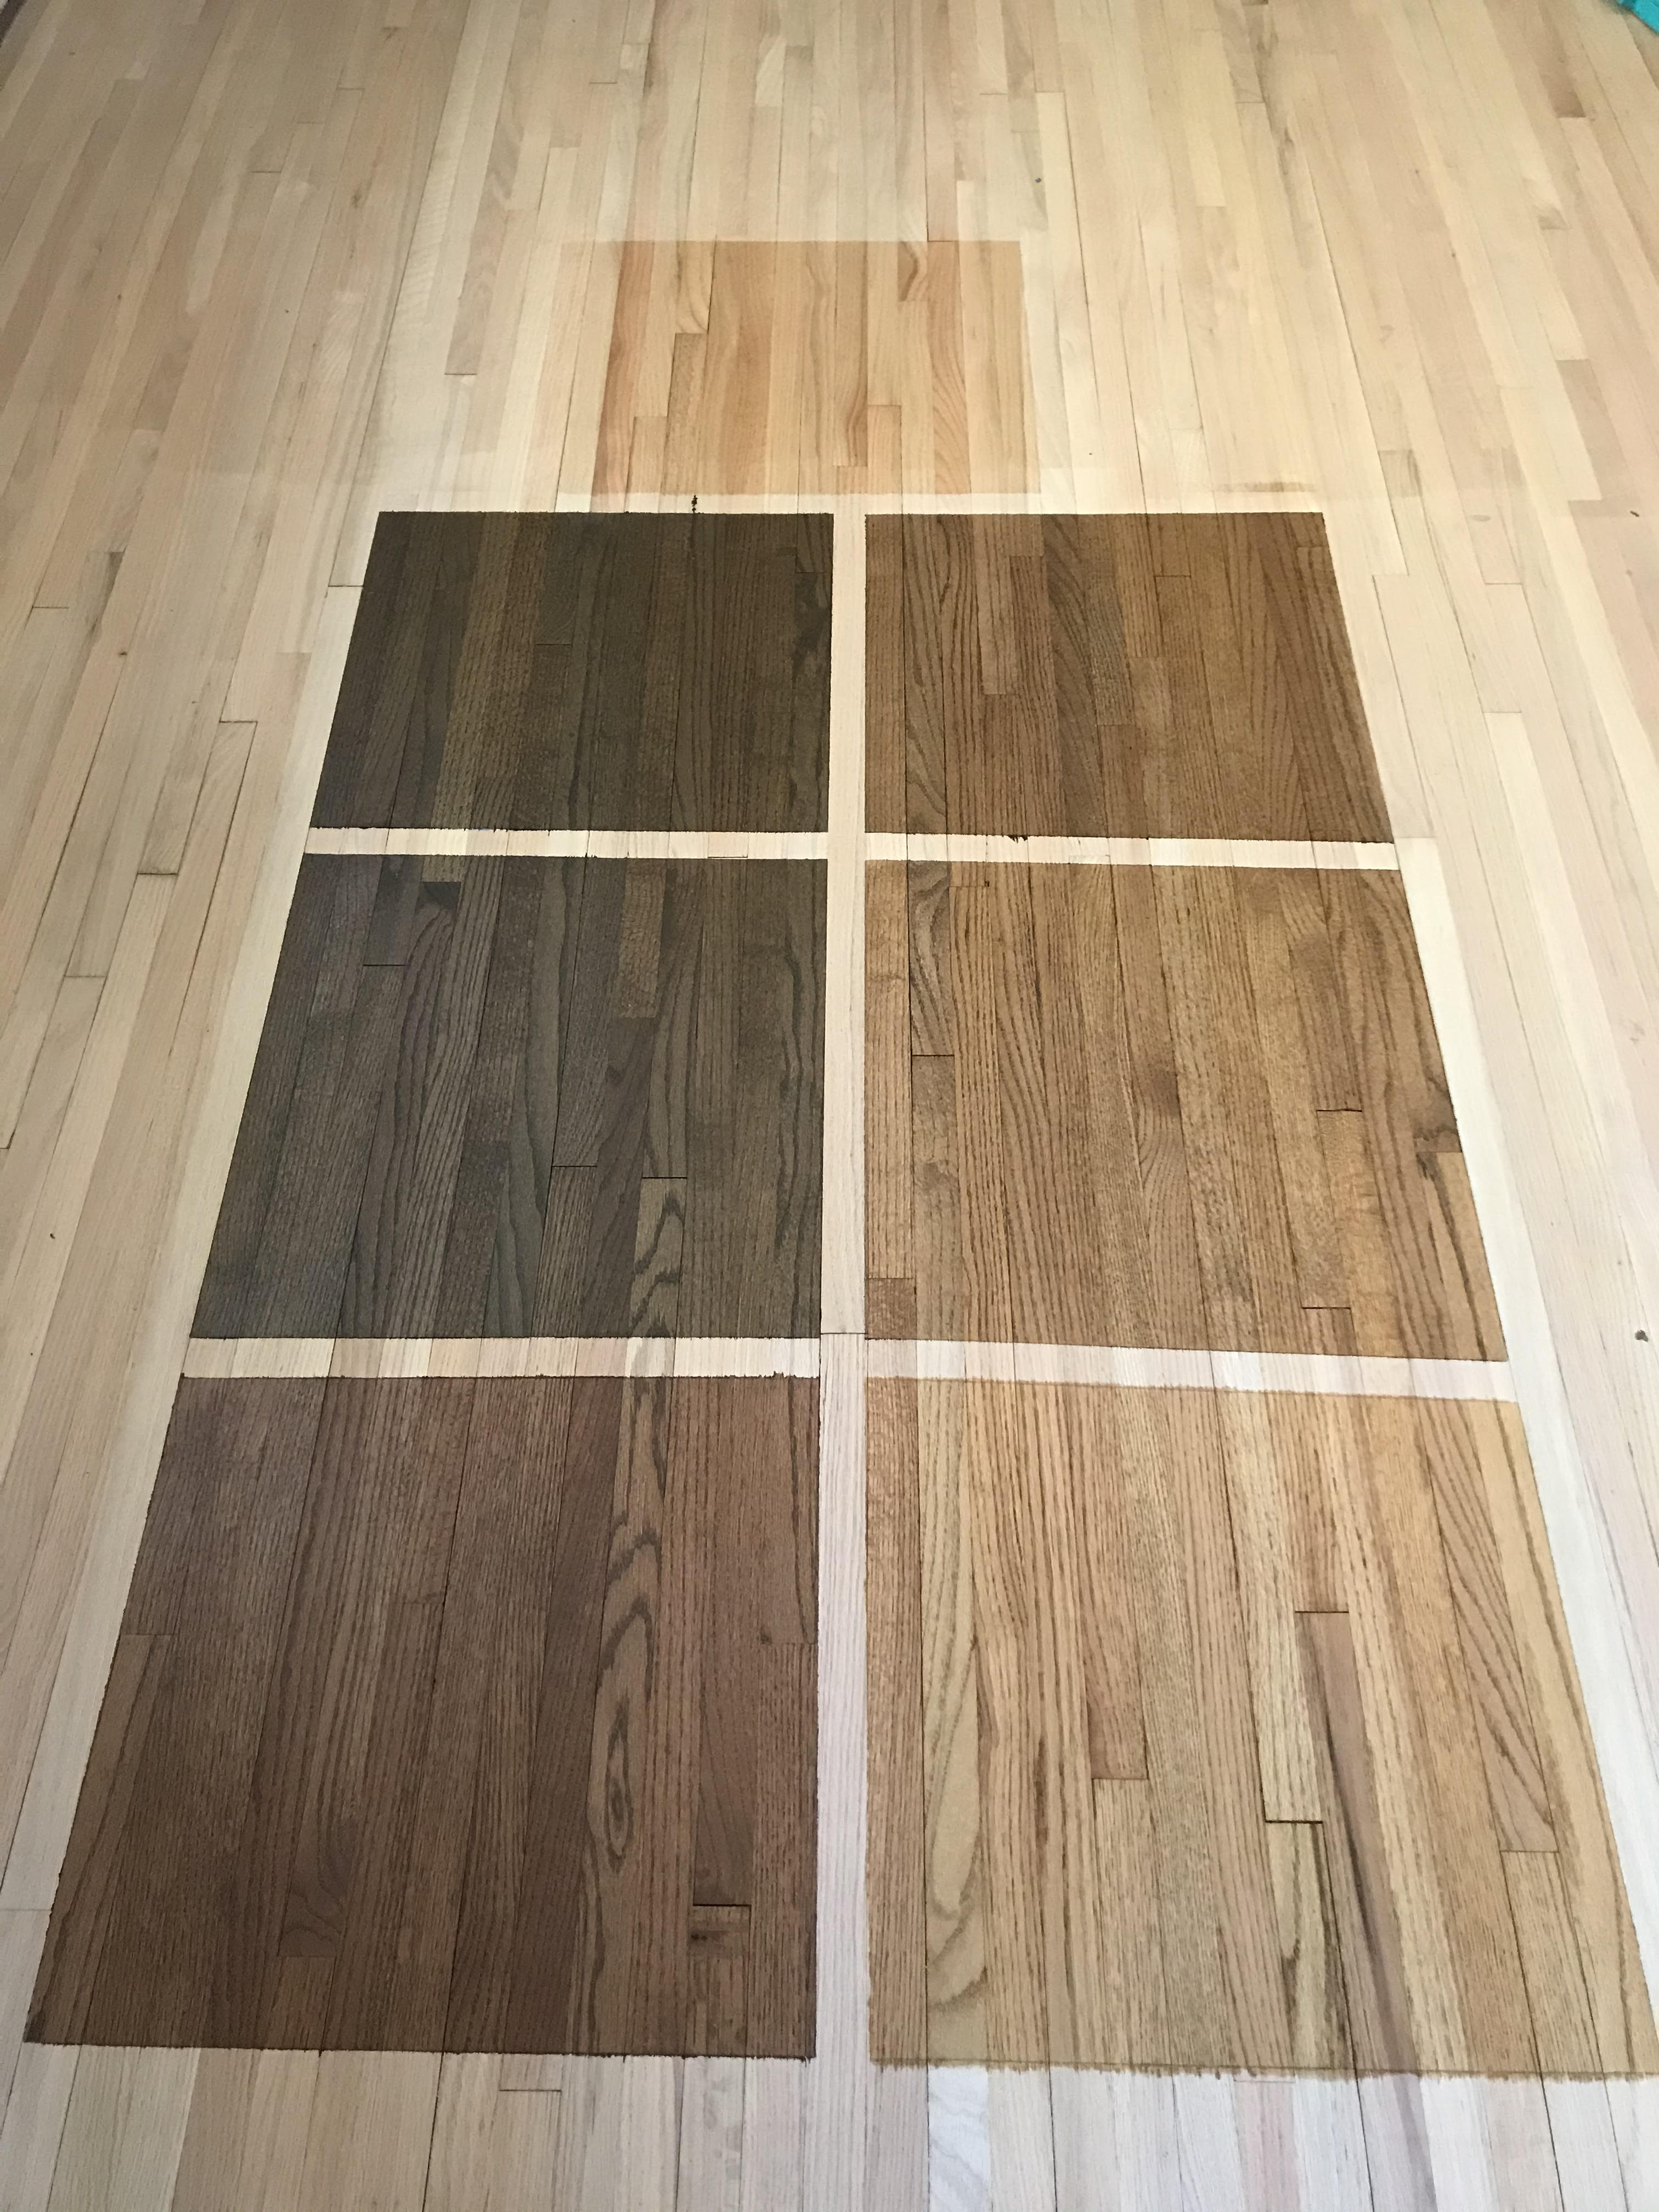 Hardwood Floor Refinishing Ub, Hardwood Floor Installation Mn